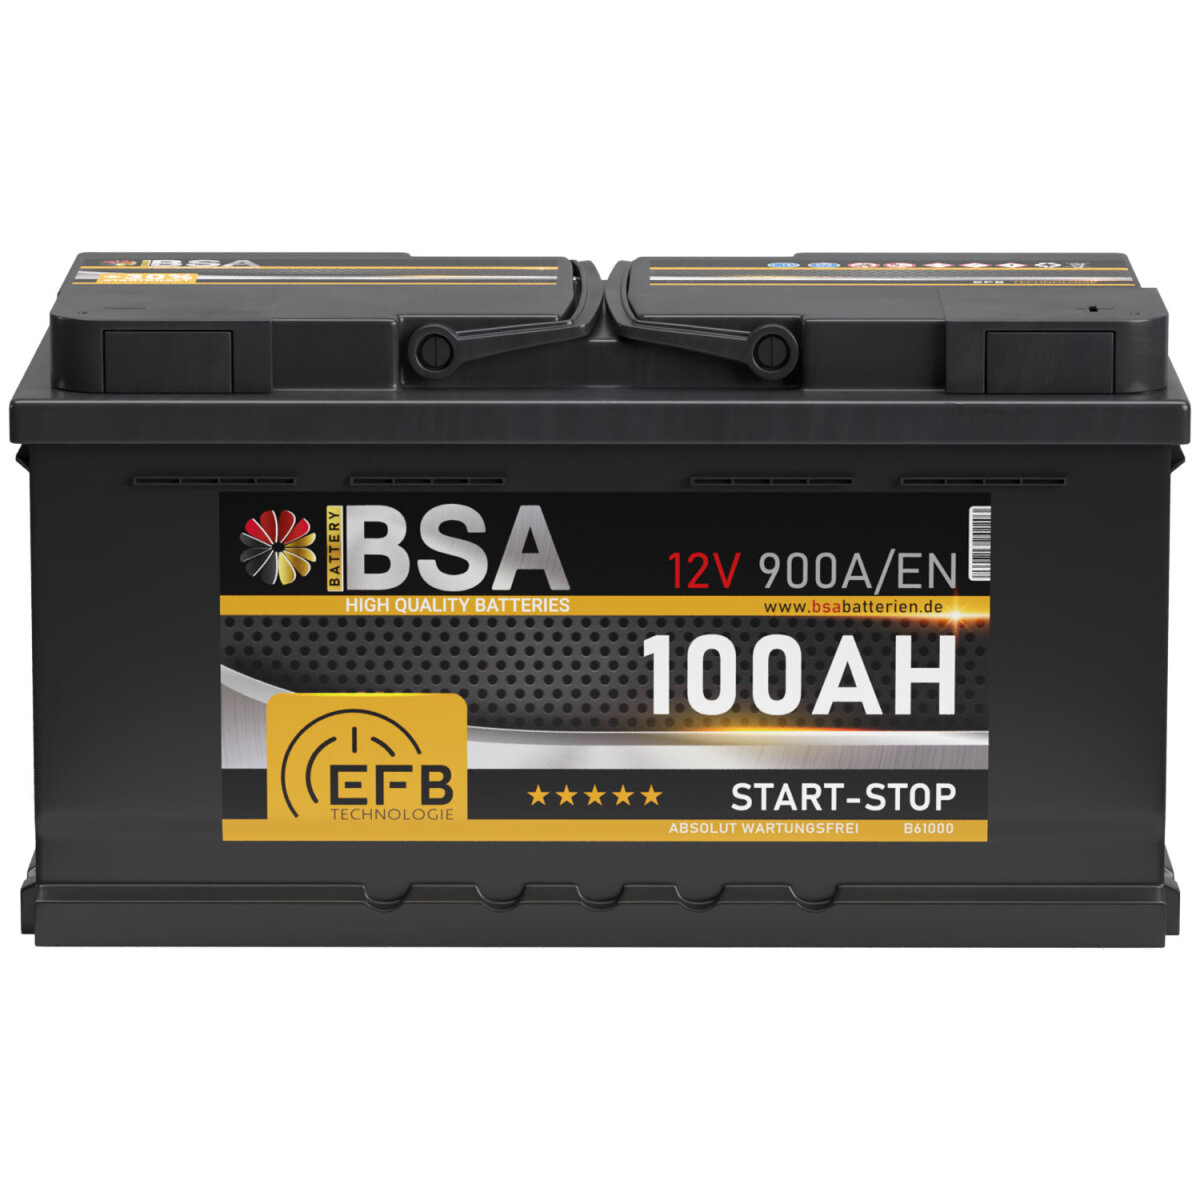 https://www.autobatterien24.com/media/image/product/7565/lg/bsa-efb-autobatterie-100ah-12v.jpg